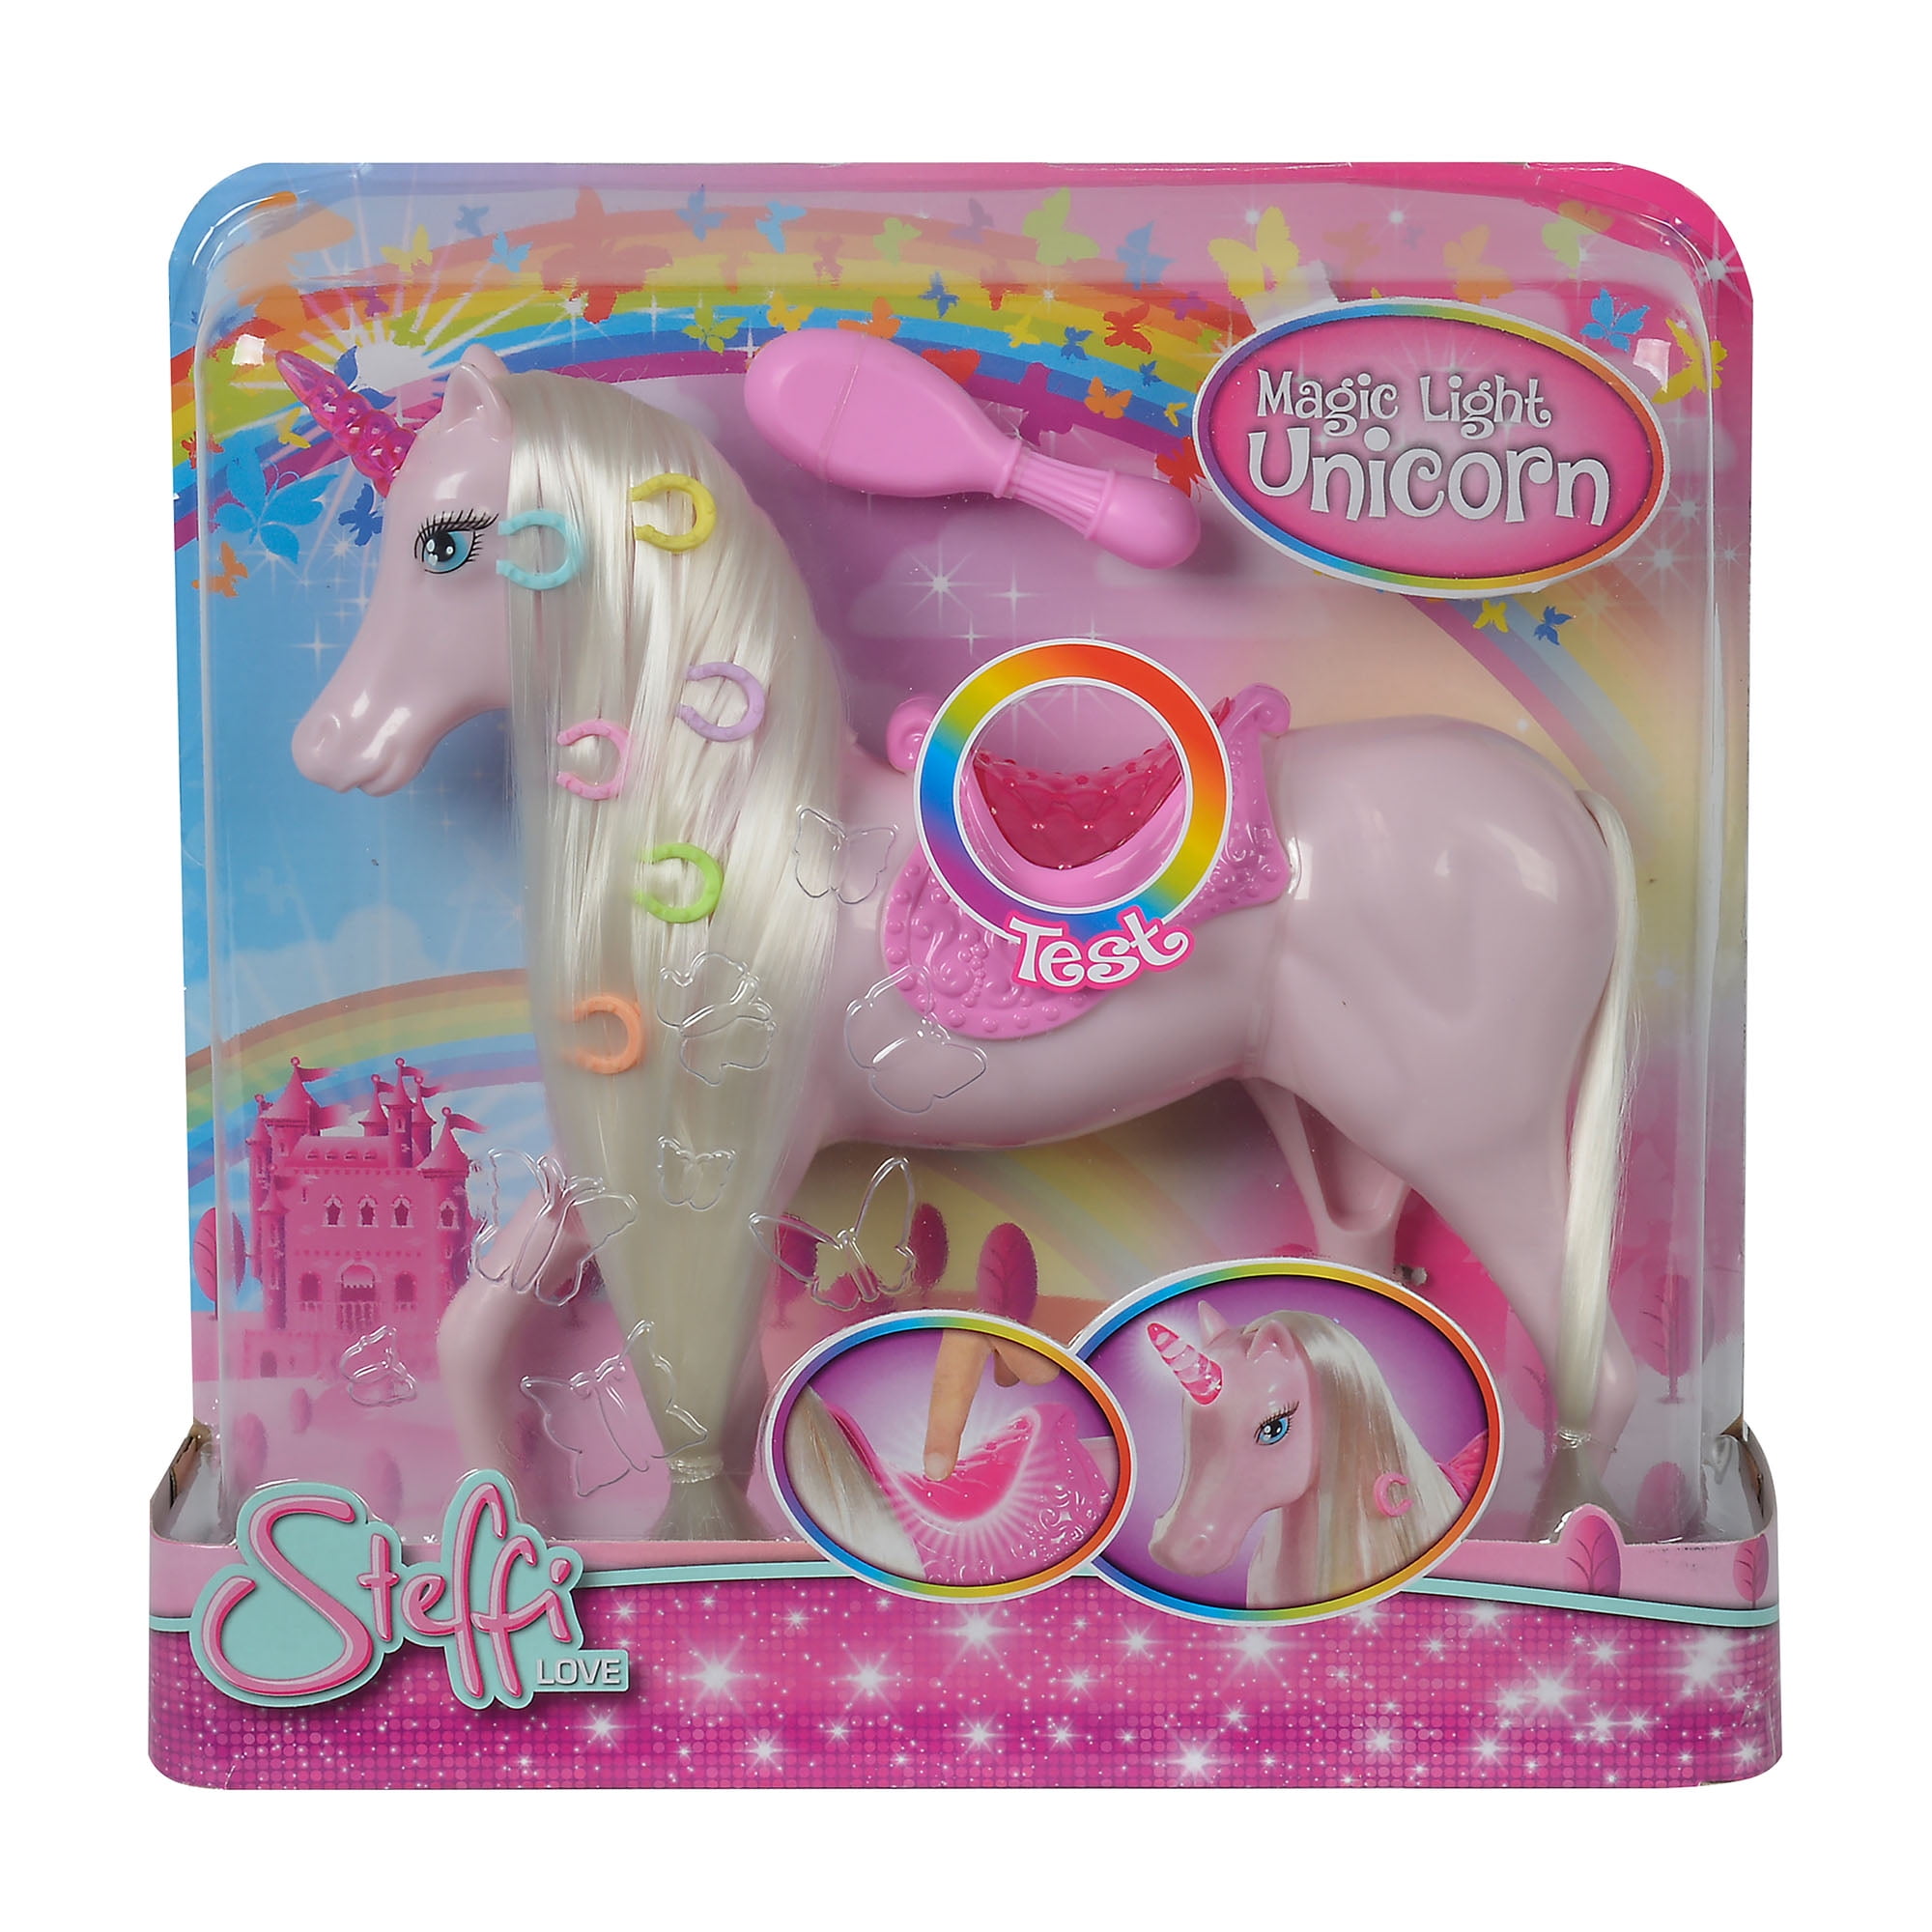 Wonder Pony Land Girl Doll With White Unicorn Play Set New In Box 